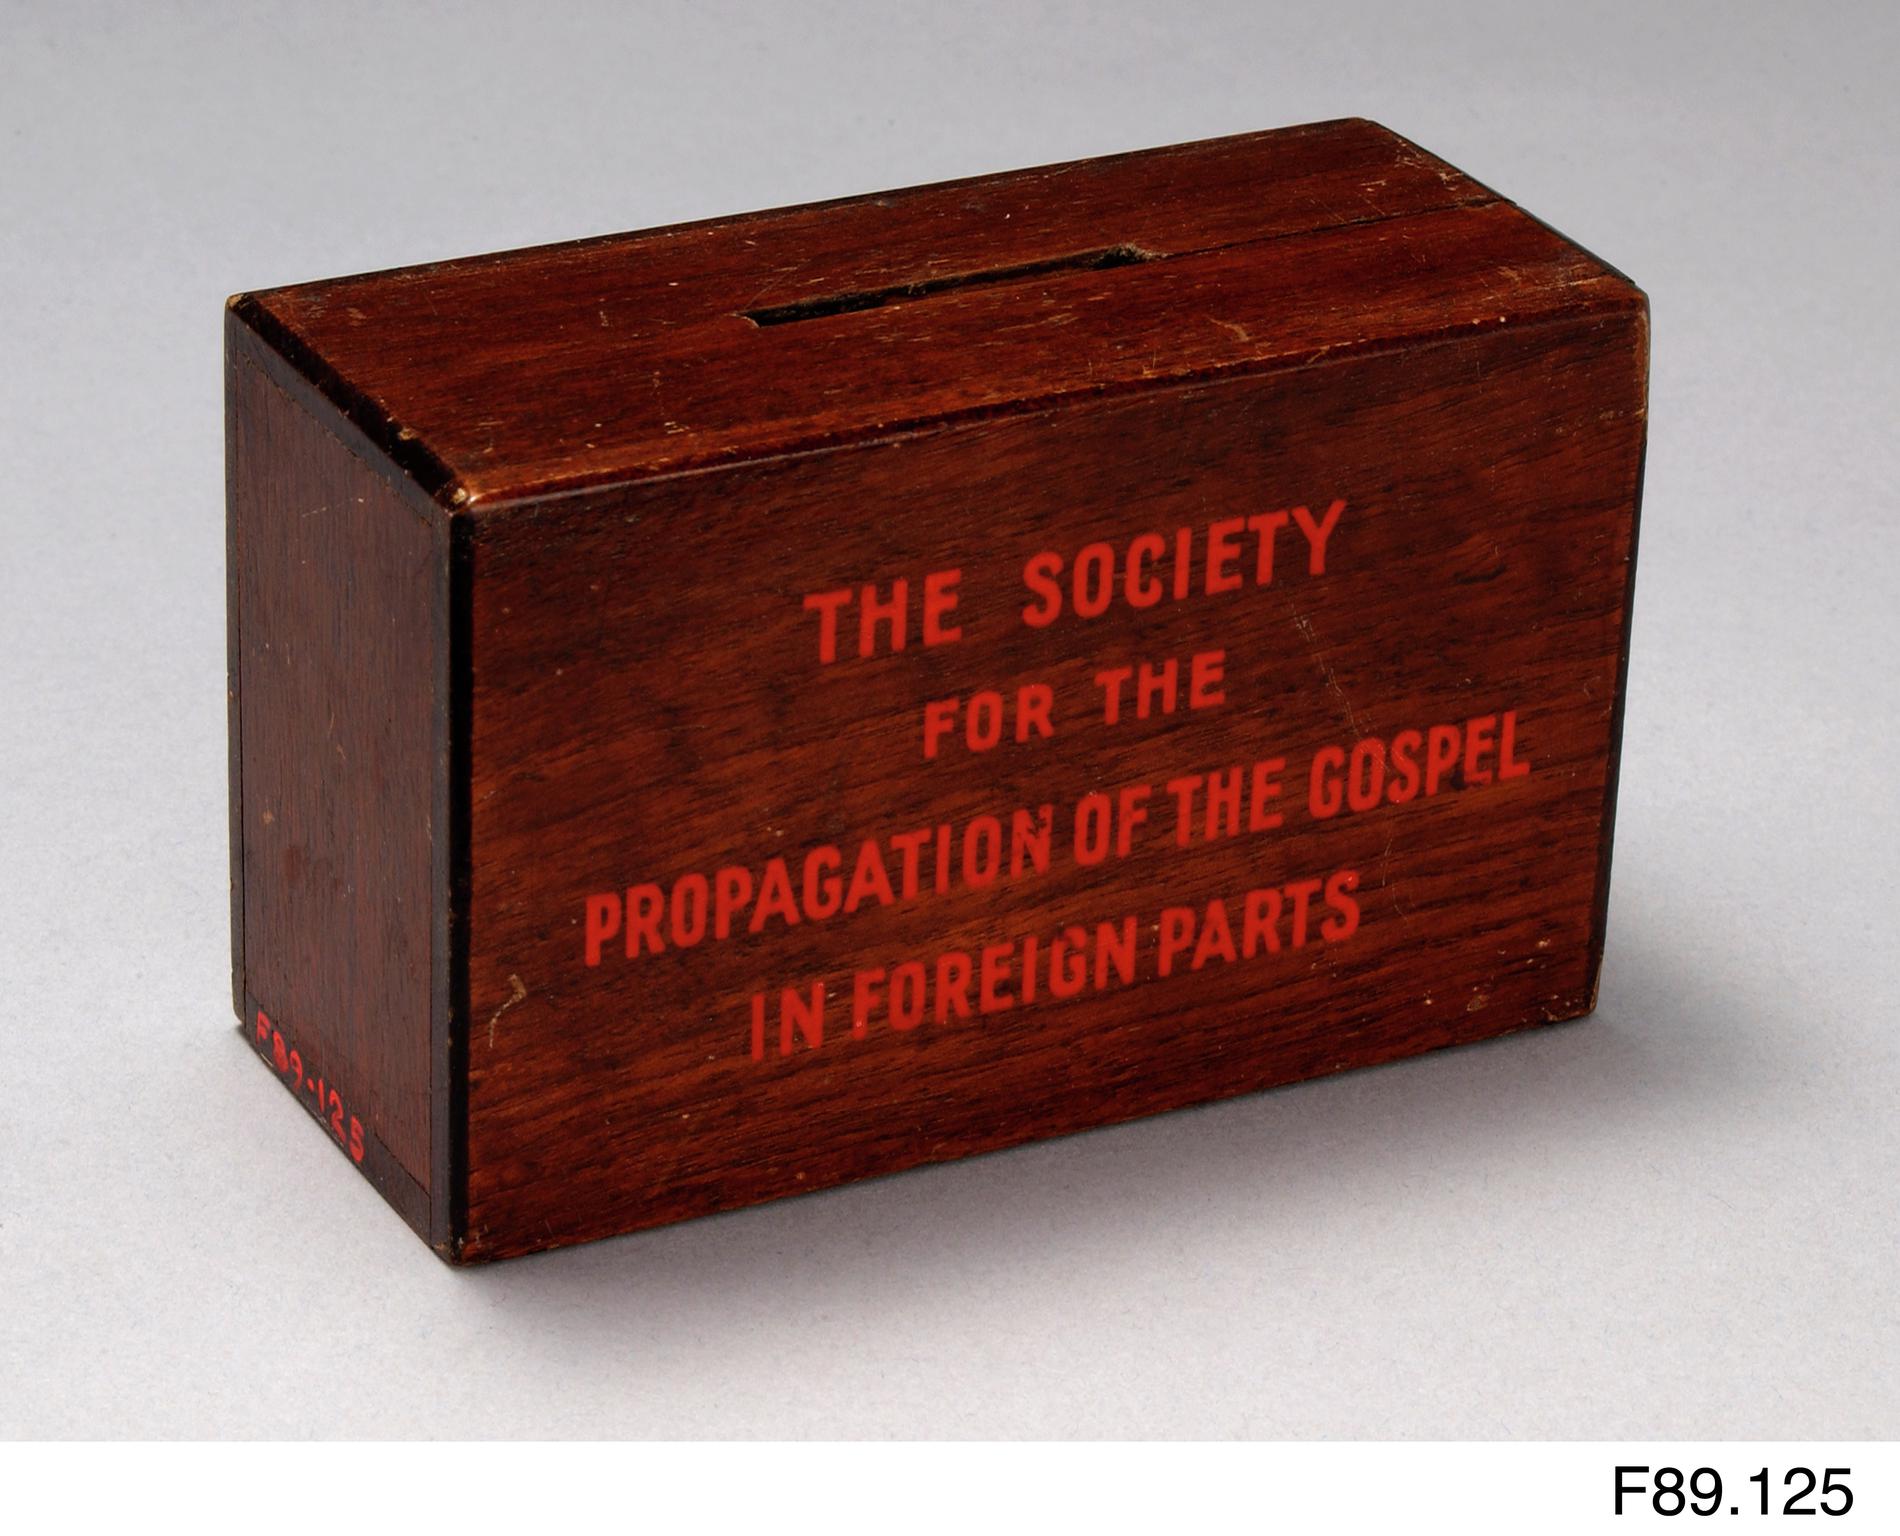 Missionary box